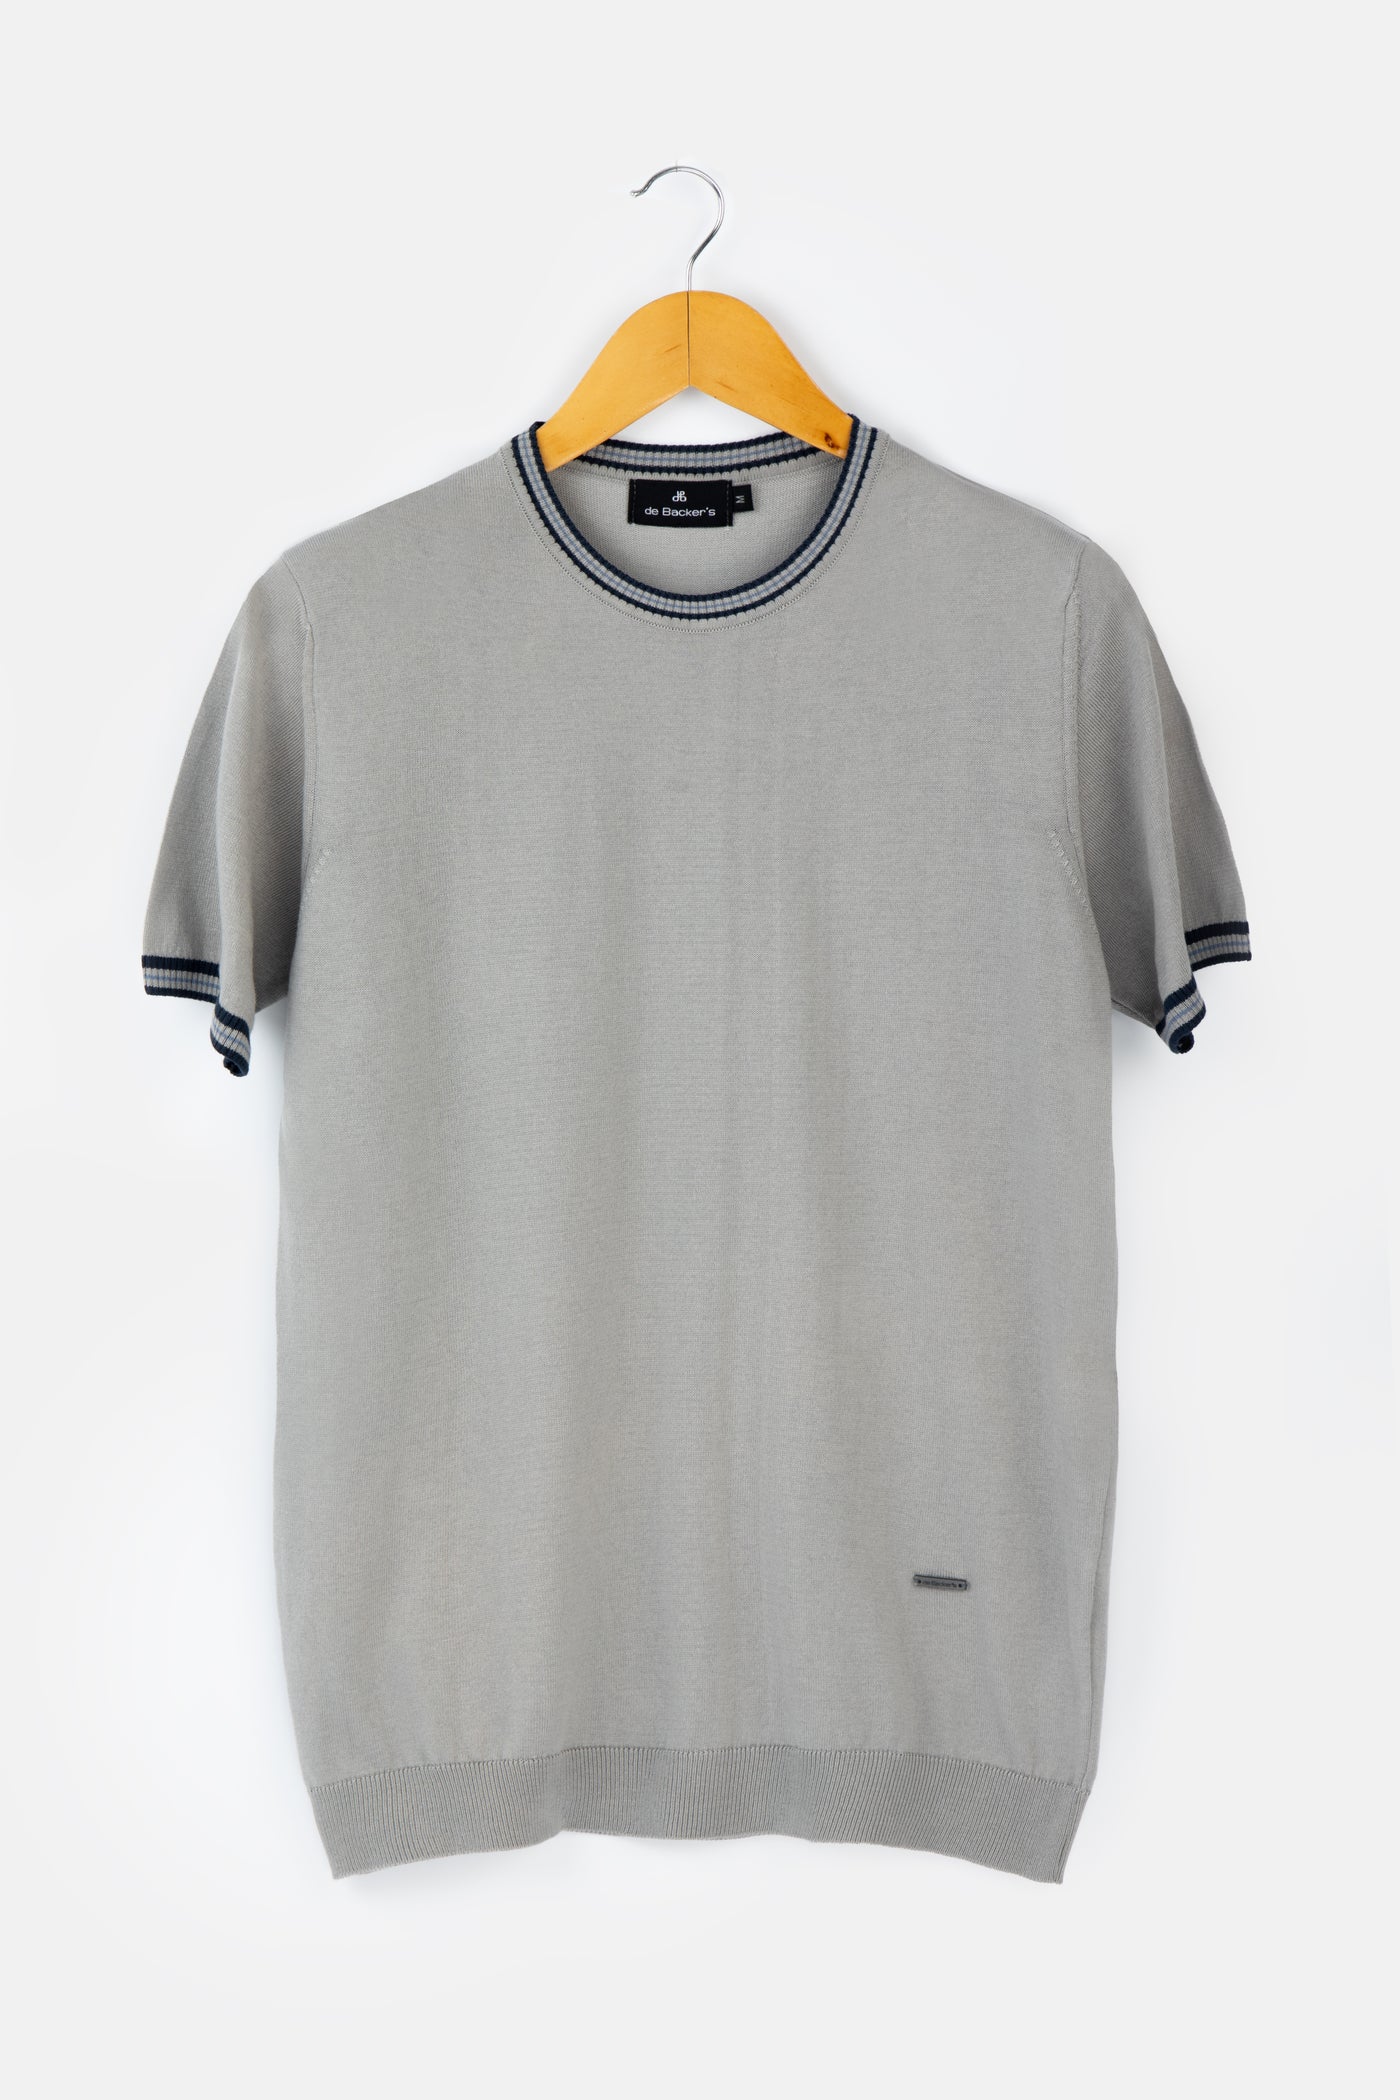 Plain Light Gray Knitted Round T-Shirt